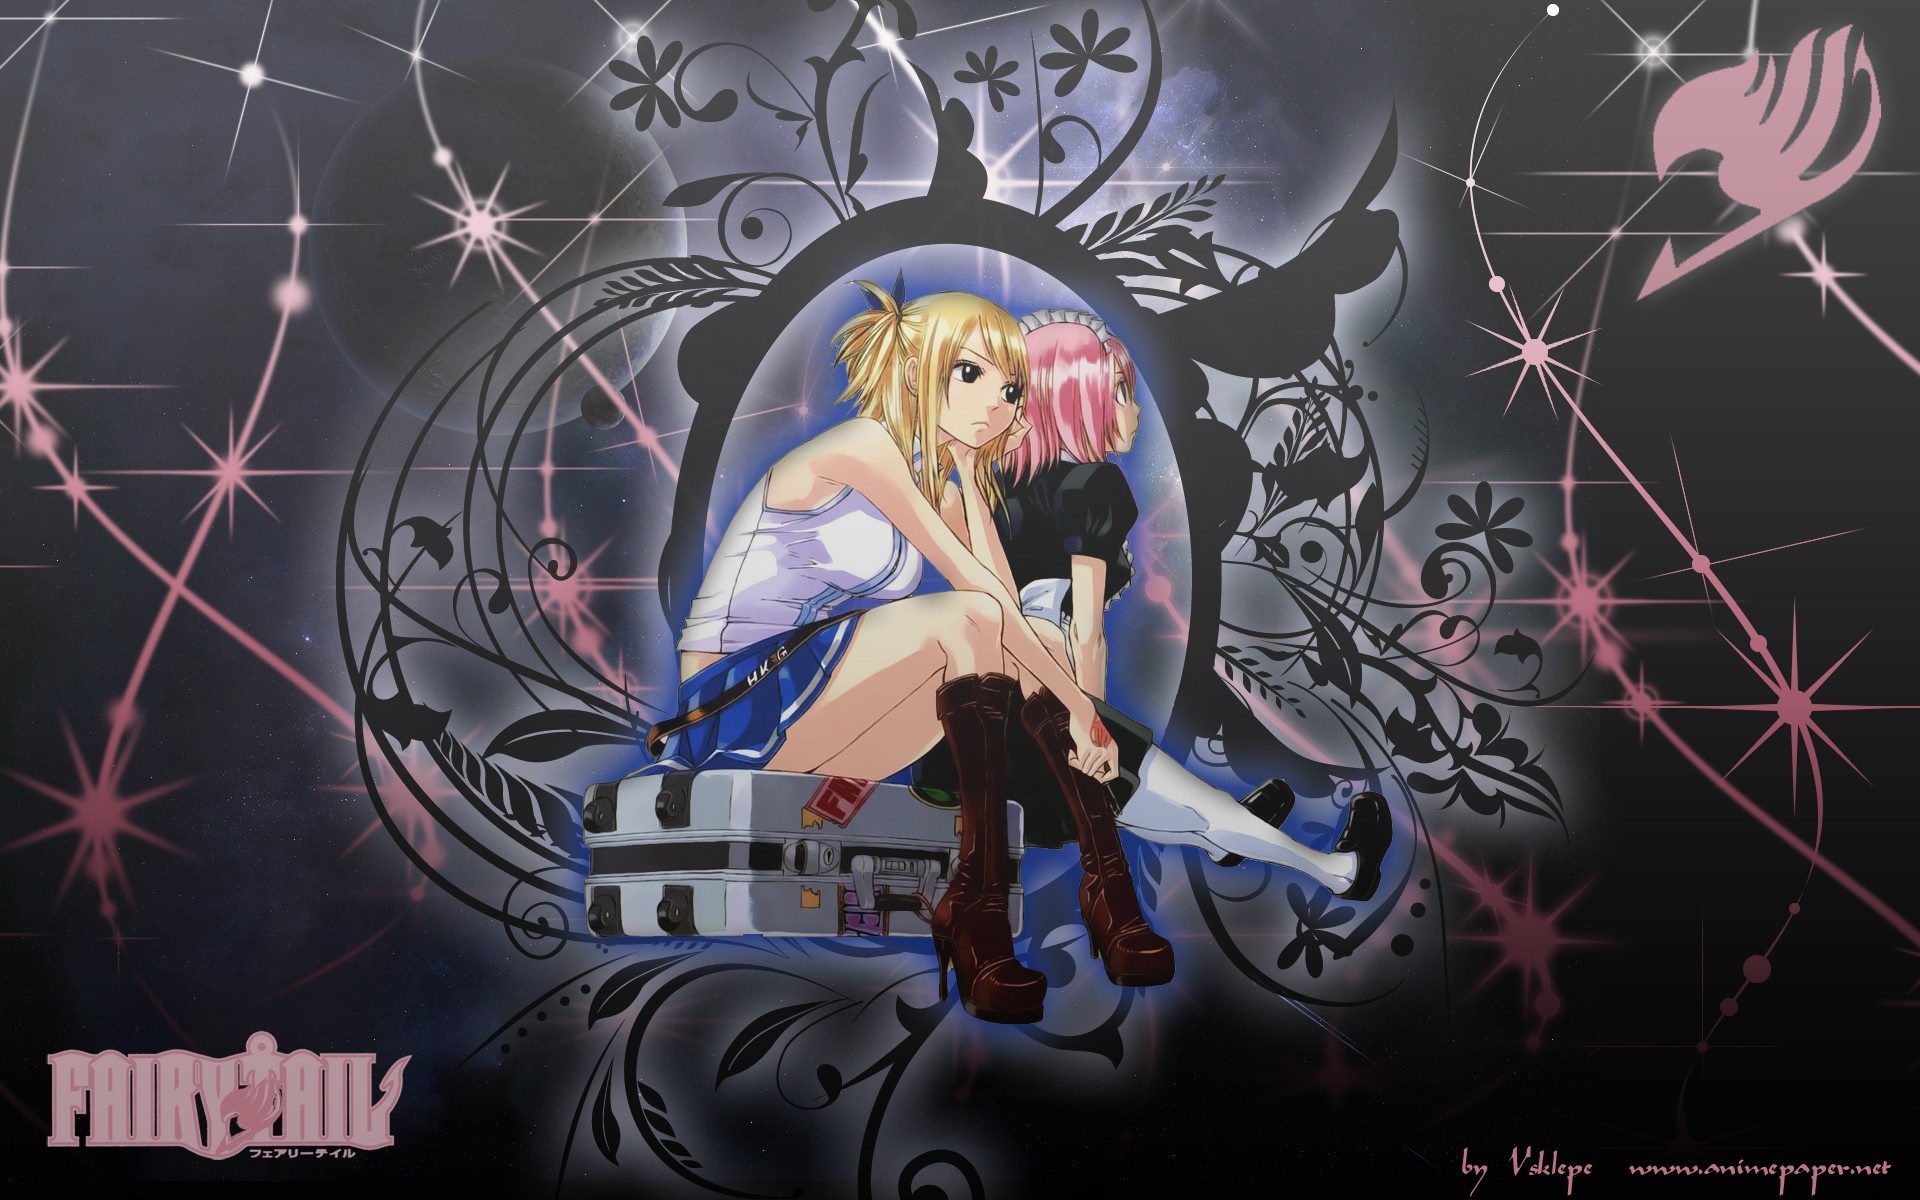 Illustration anime fairy tail heartfilia lucy art screenshot puter wallpaper album cover